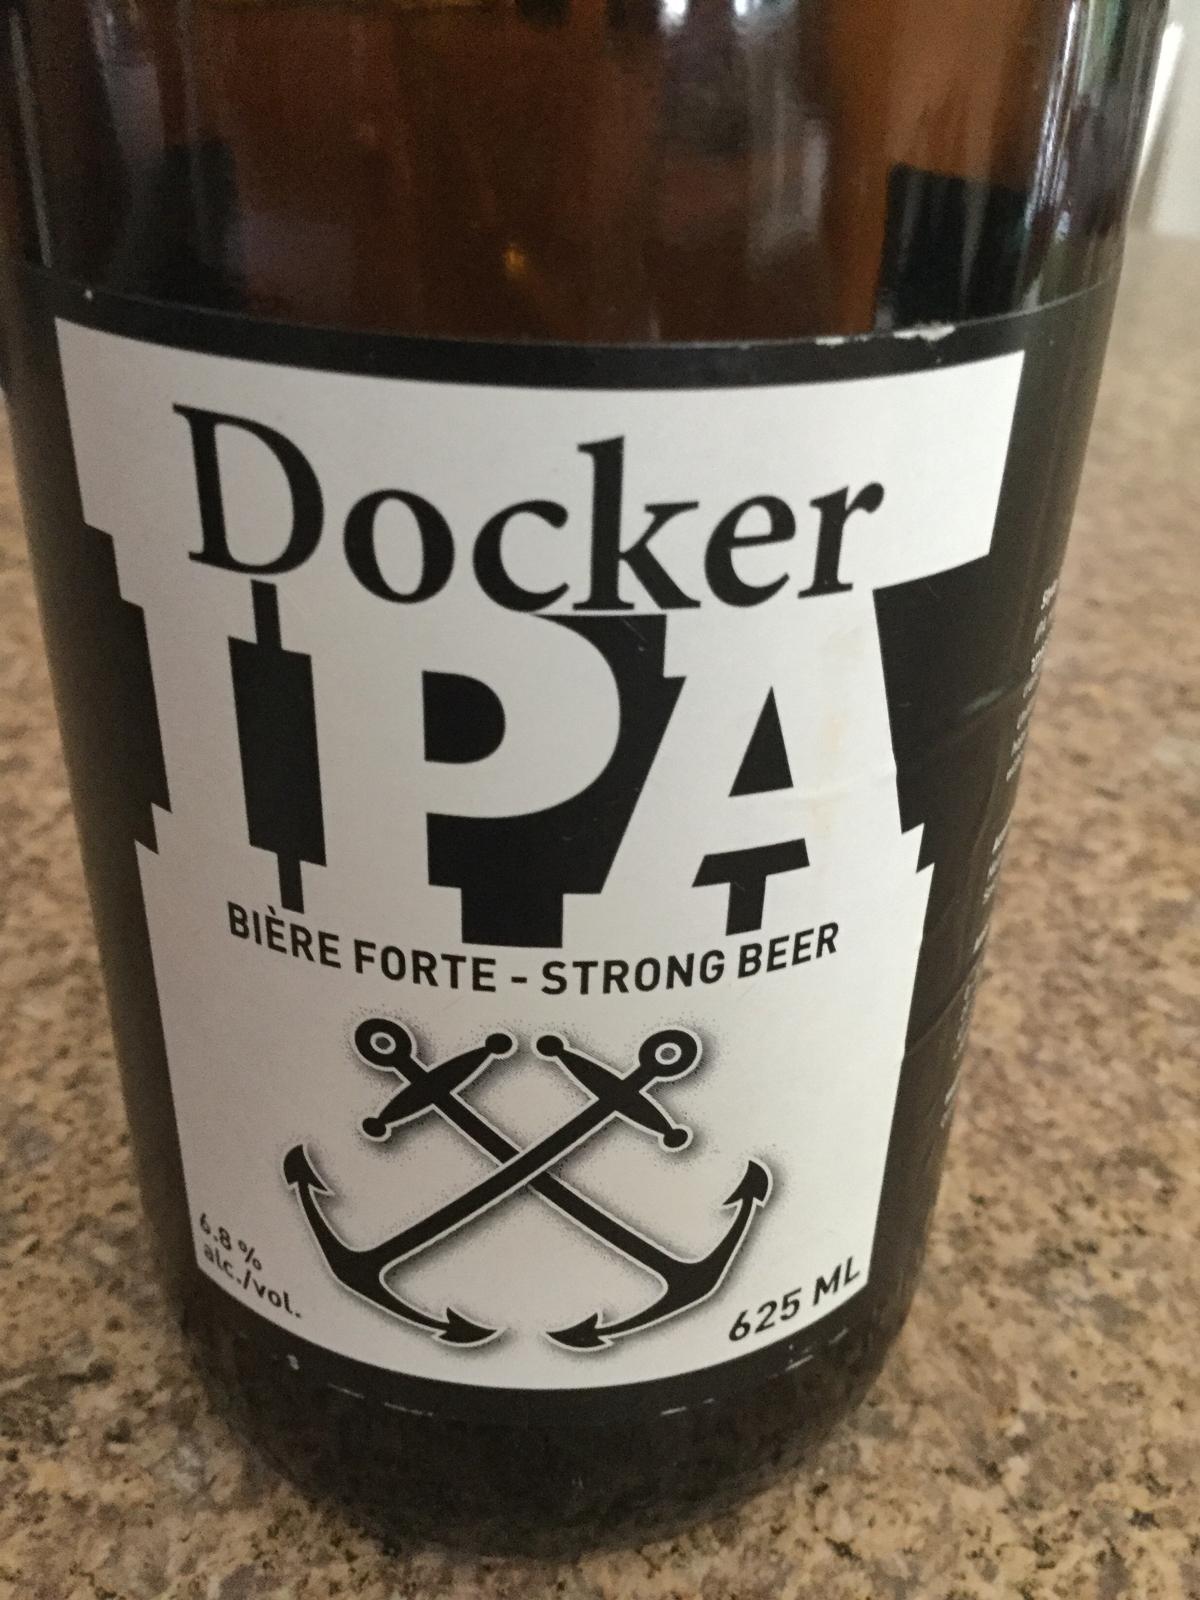 Docker IPA